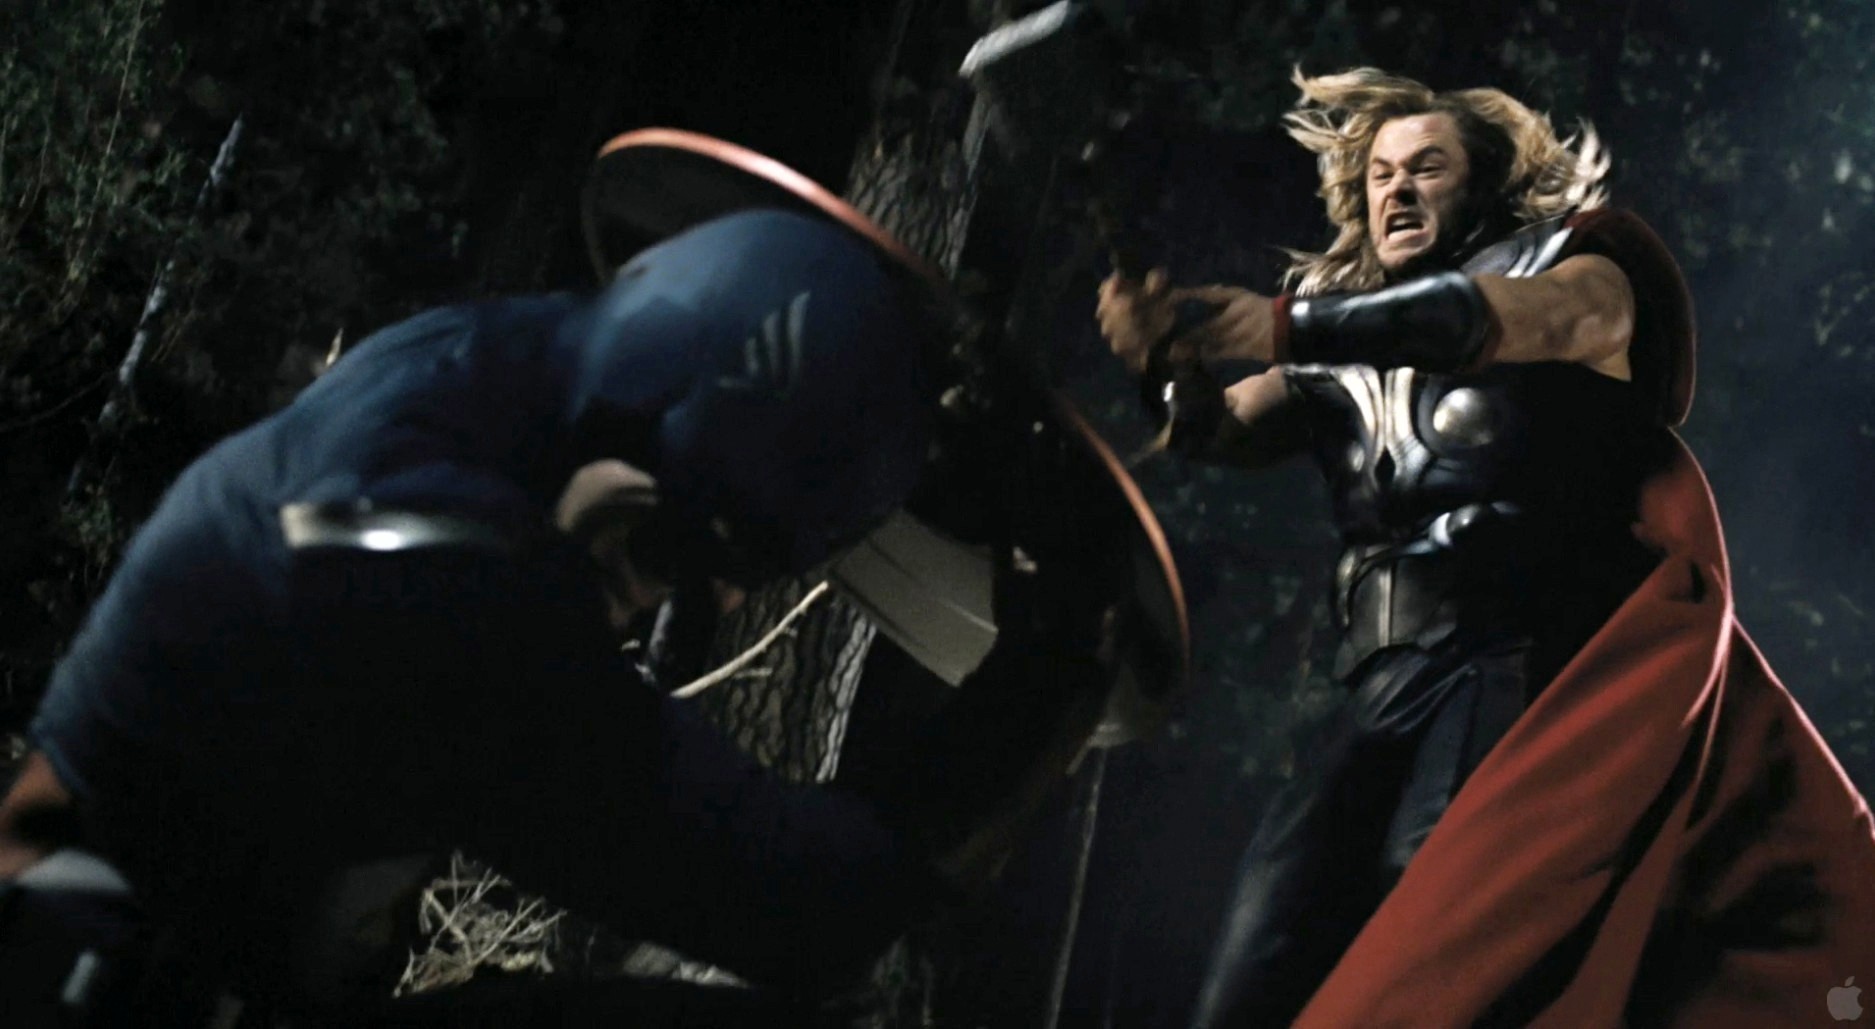 Chris Evans stars as Steve Rogers/Captain America and Chris Hemsworth stars as Thor in Walt Disney Pictures' The Avengers (2012)